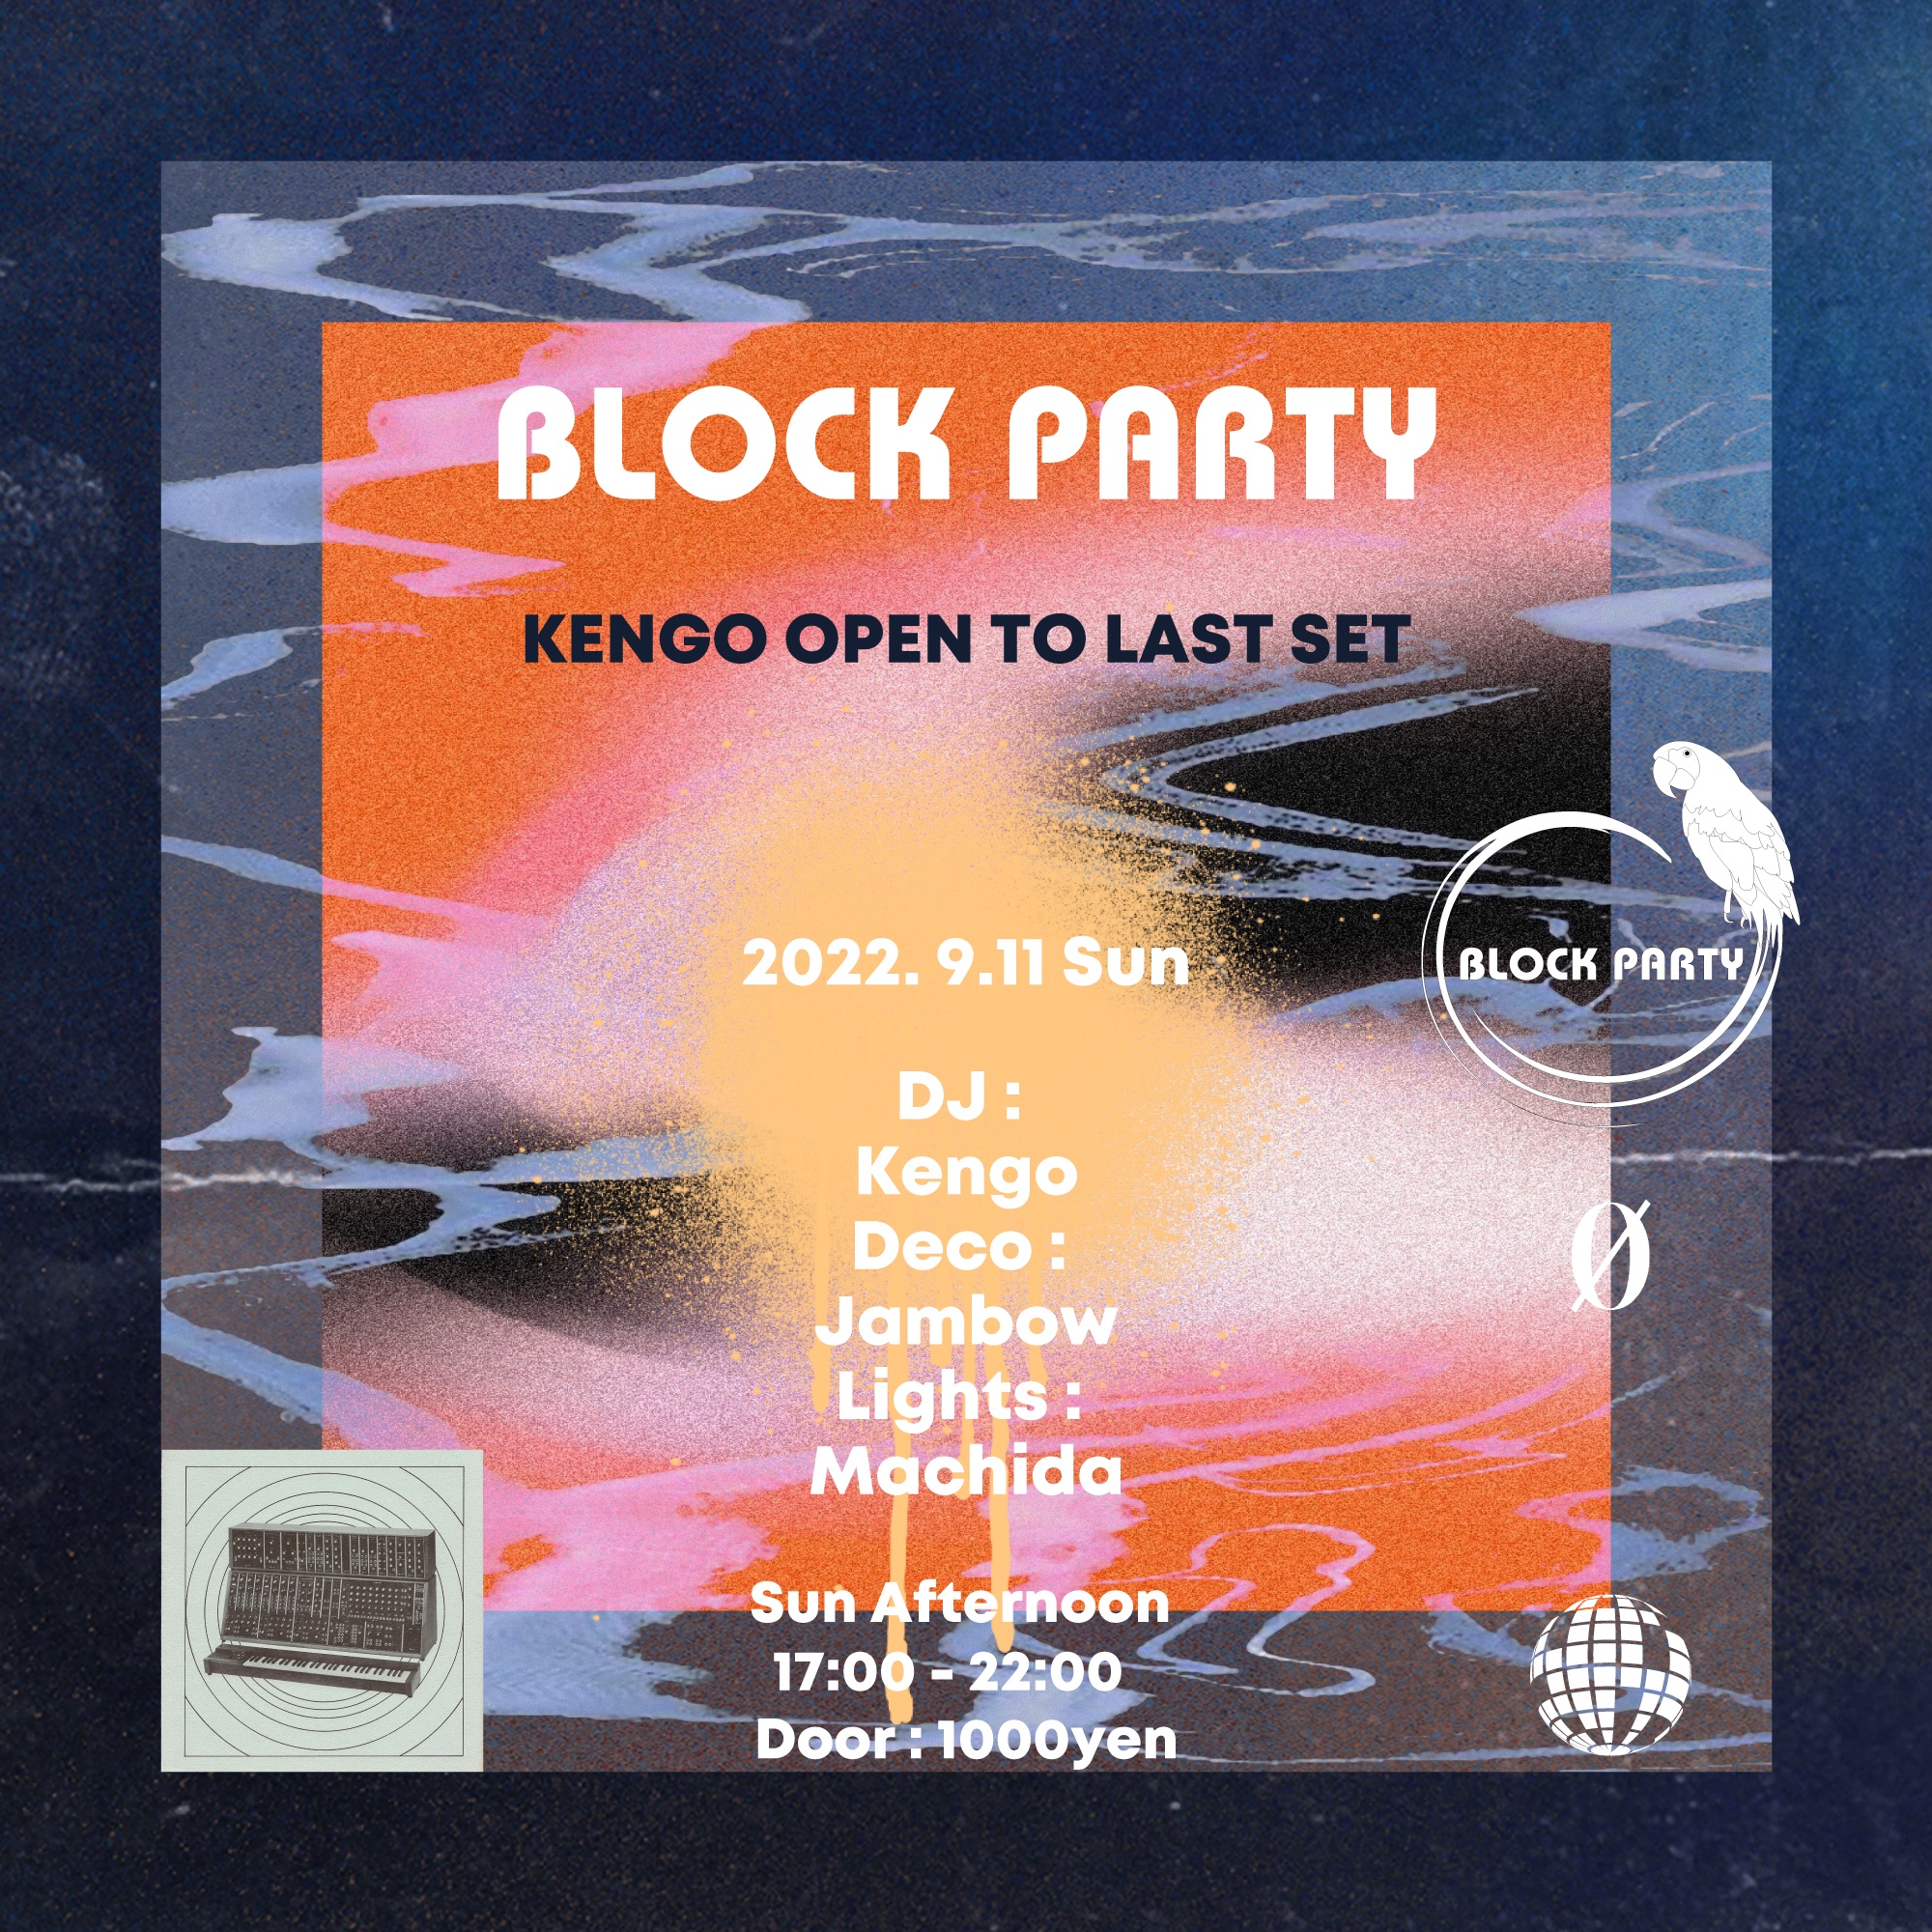 9.11.22 (Sun Afternoon) Block Party “Kengo Open To Last Set” @ 0 Zero